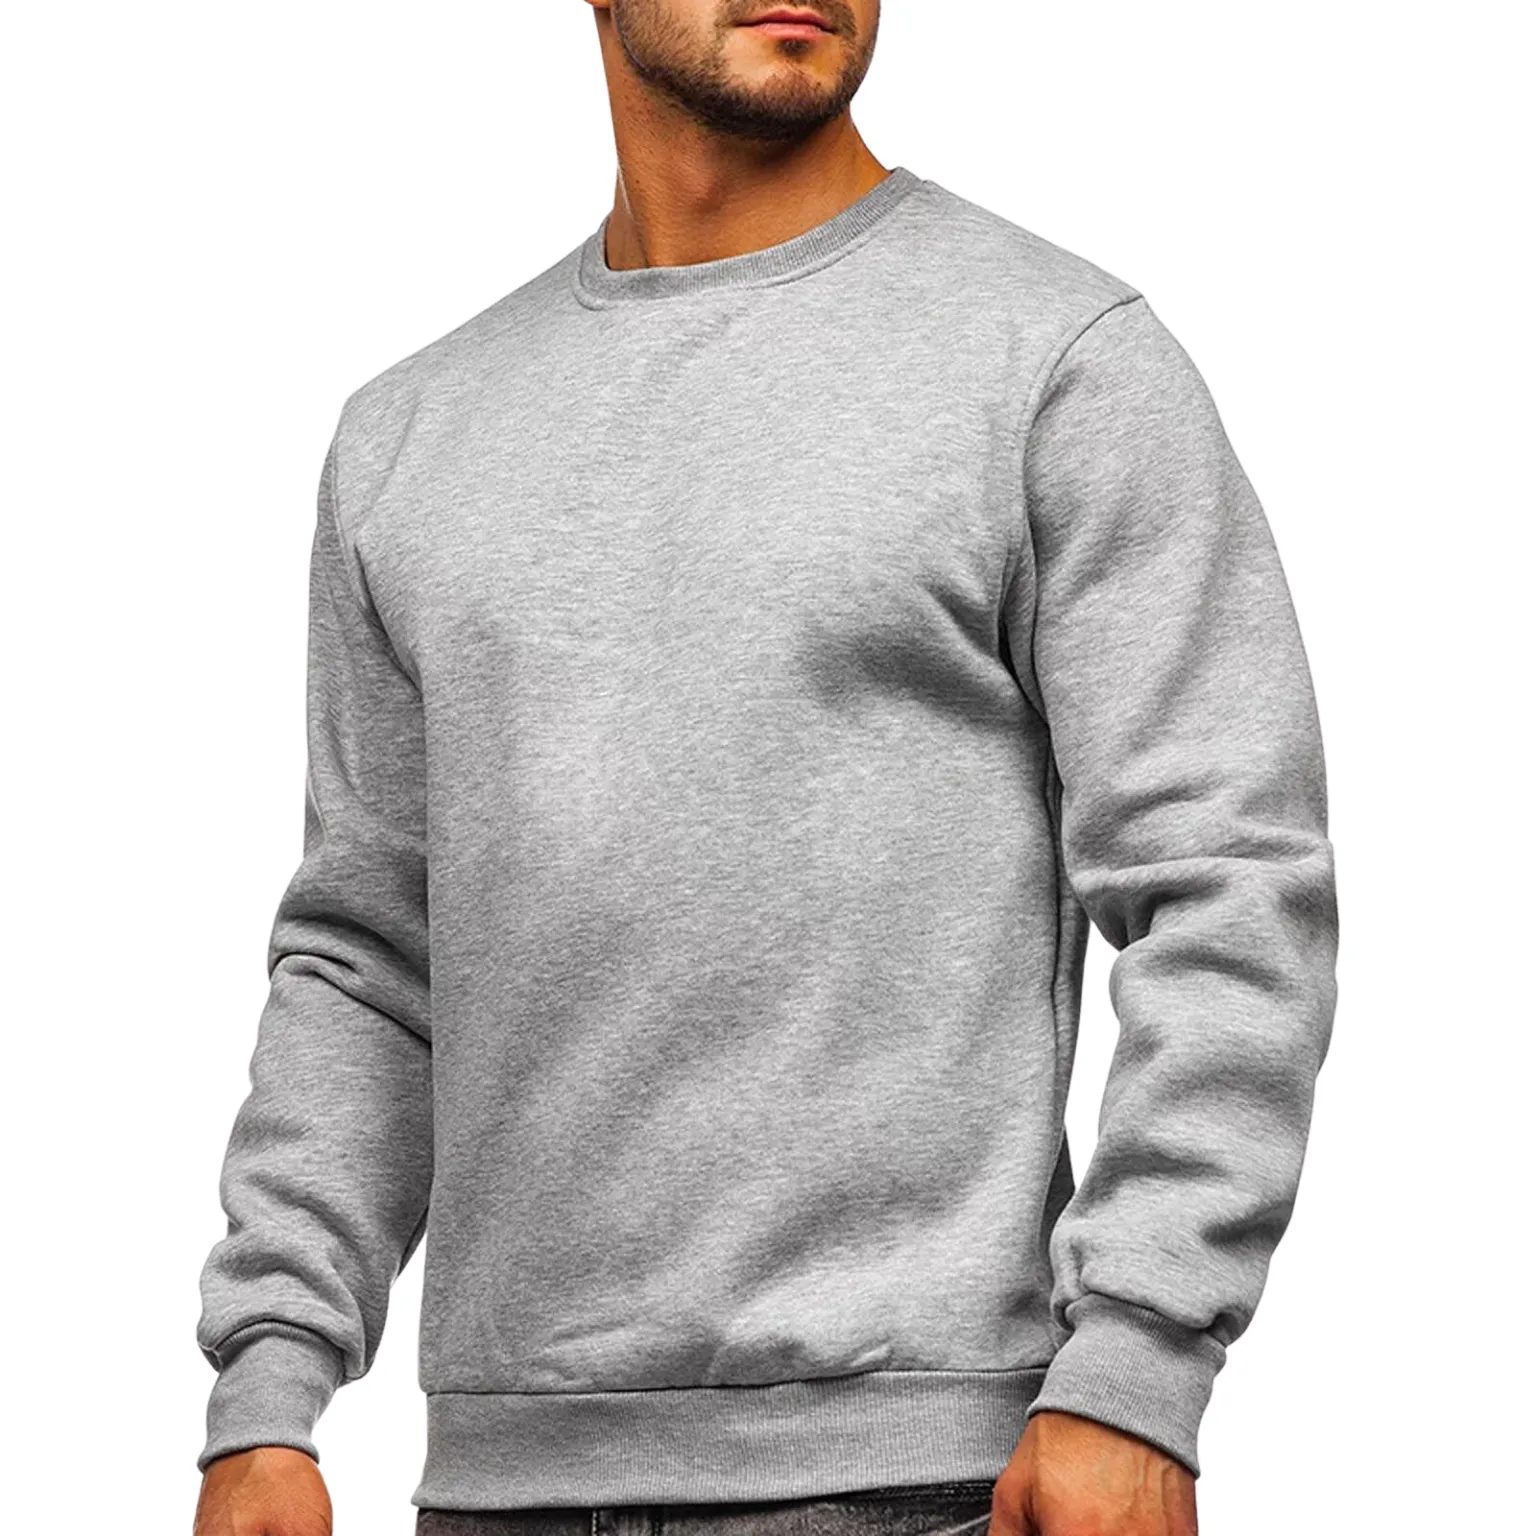 Men's Sweatshirt manufacturing with trendy design